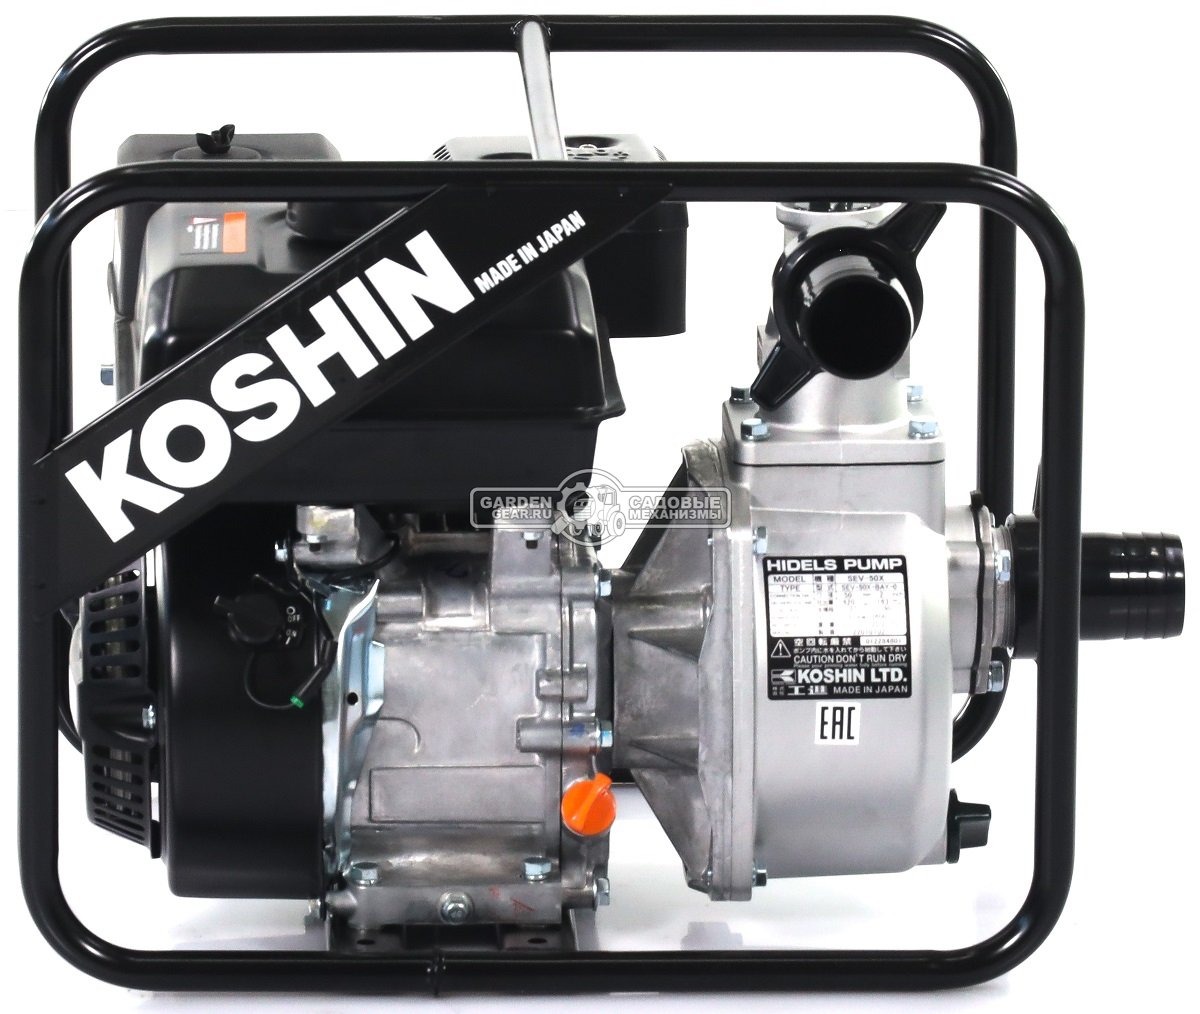 Мотопомпа бензиновая Koshin SEV-50X для чистой воды (JPN, Koshin K180, 179 куб.см., 620 л/мин., 27 м., 27 кг.)